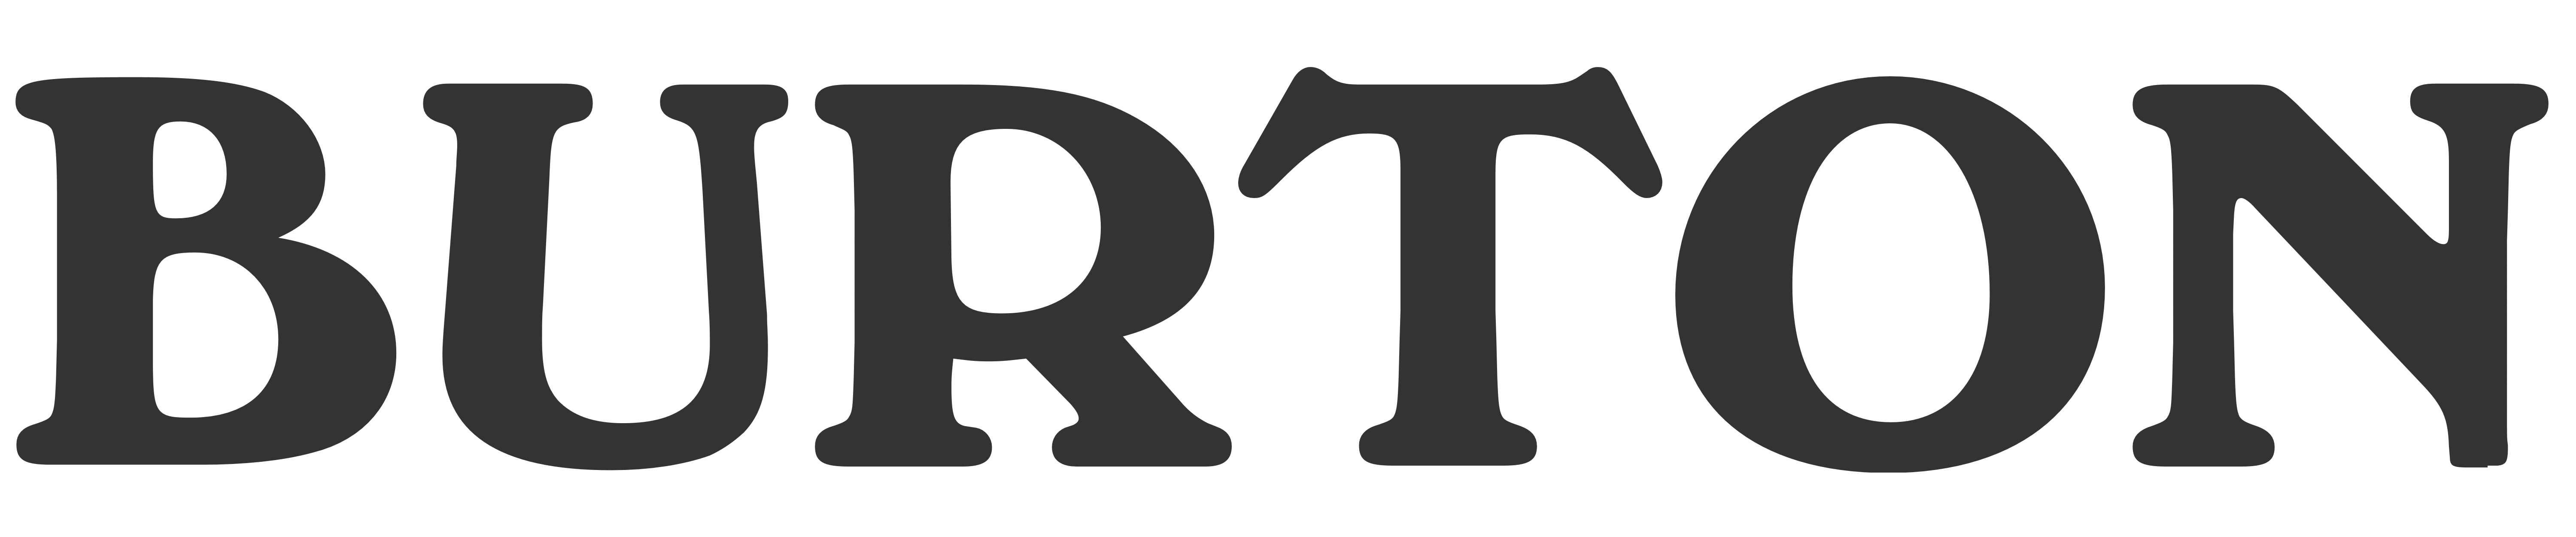 Burton logo, logotype